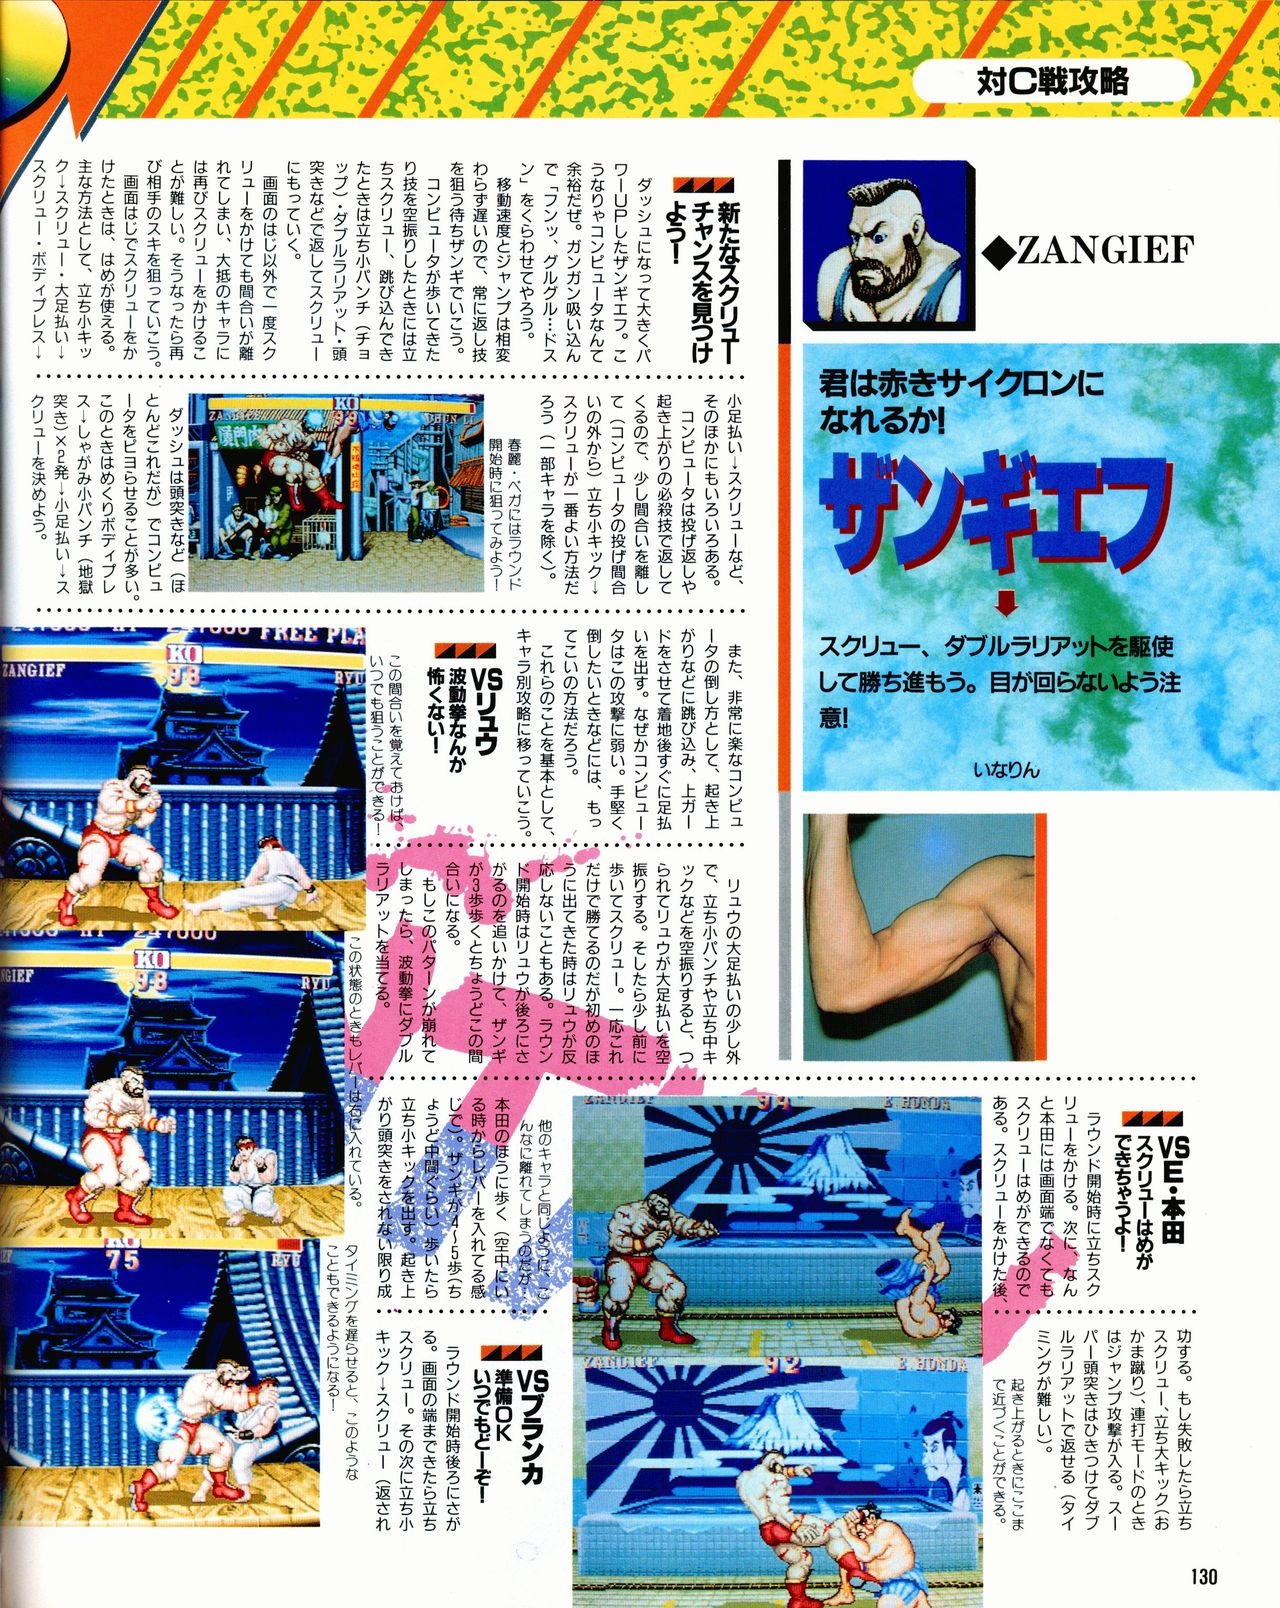 Street Fighter II Dash - Gamest special issue 77 131